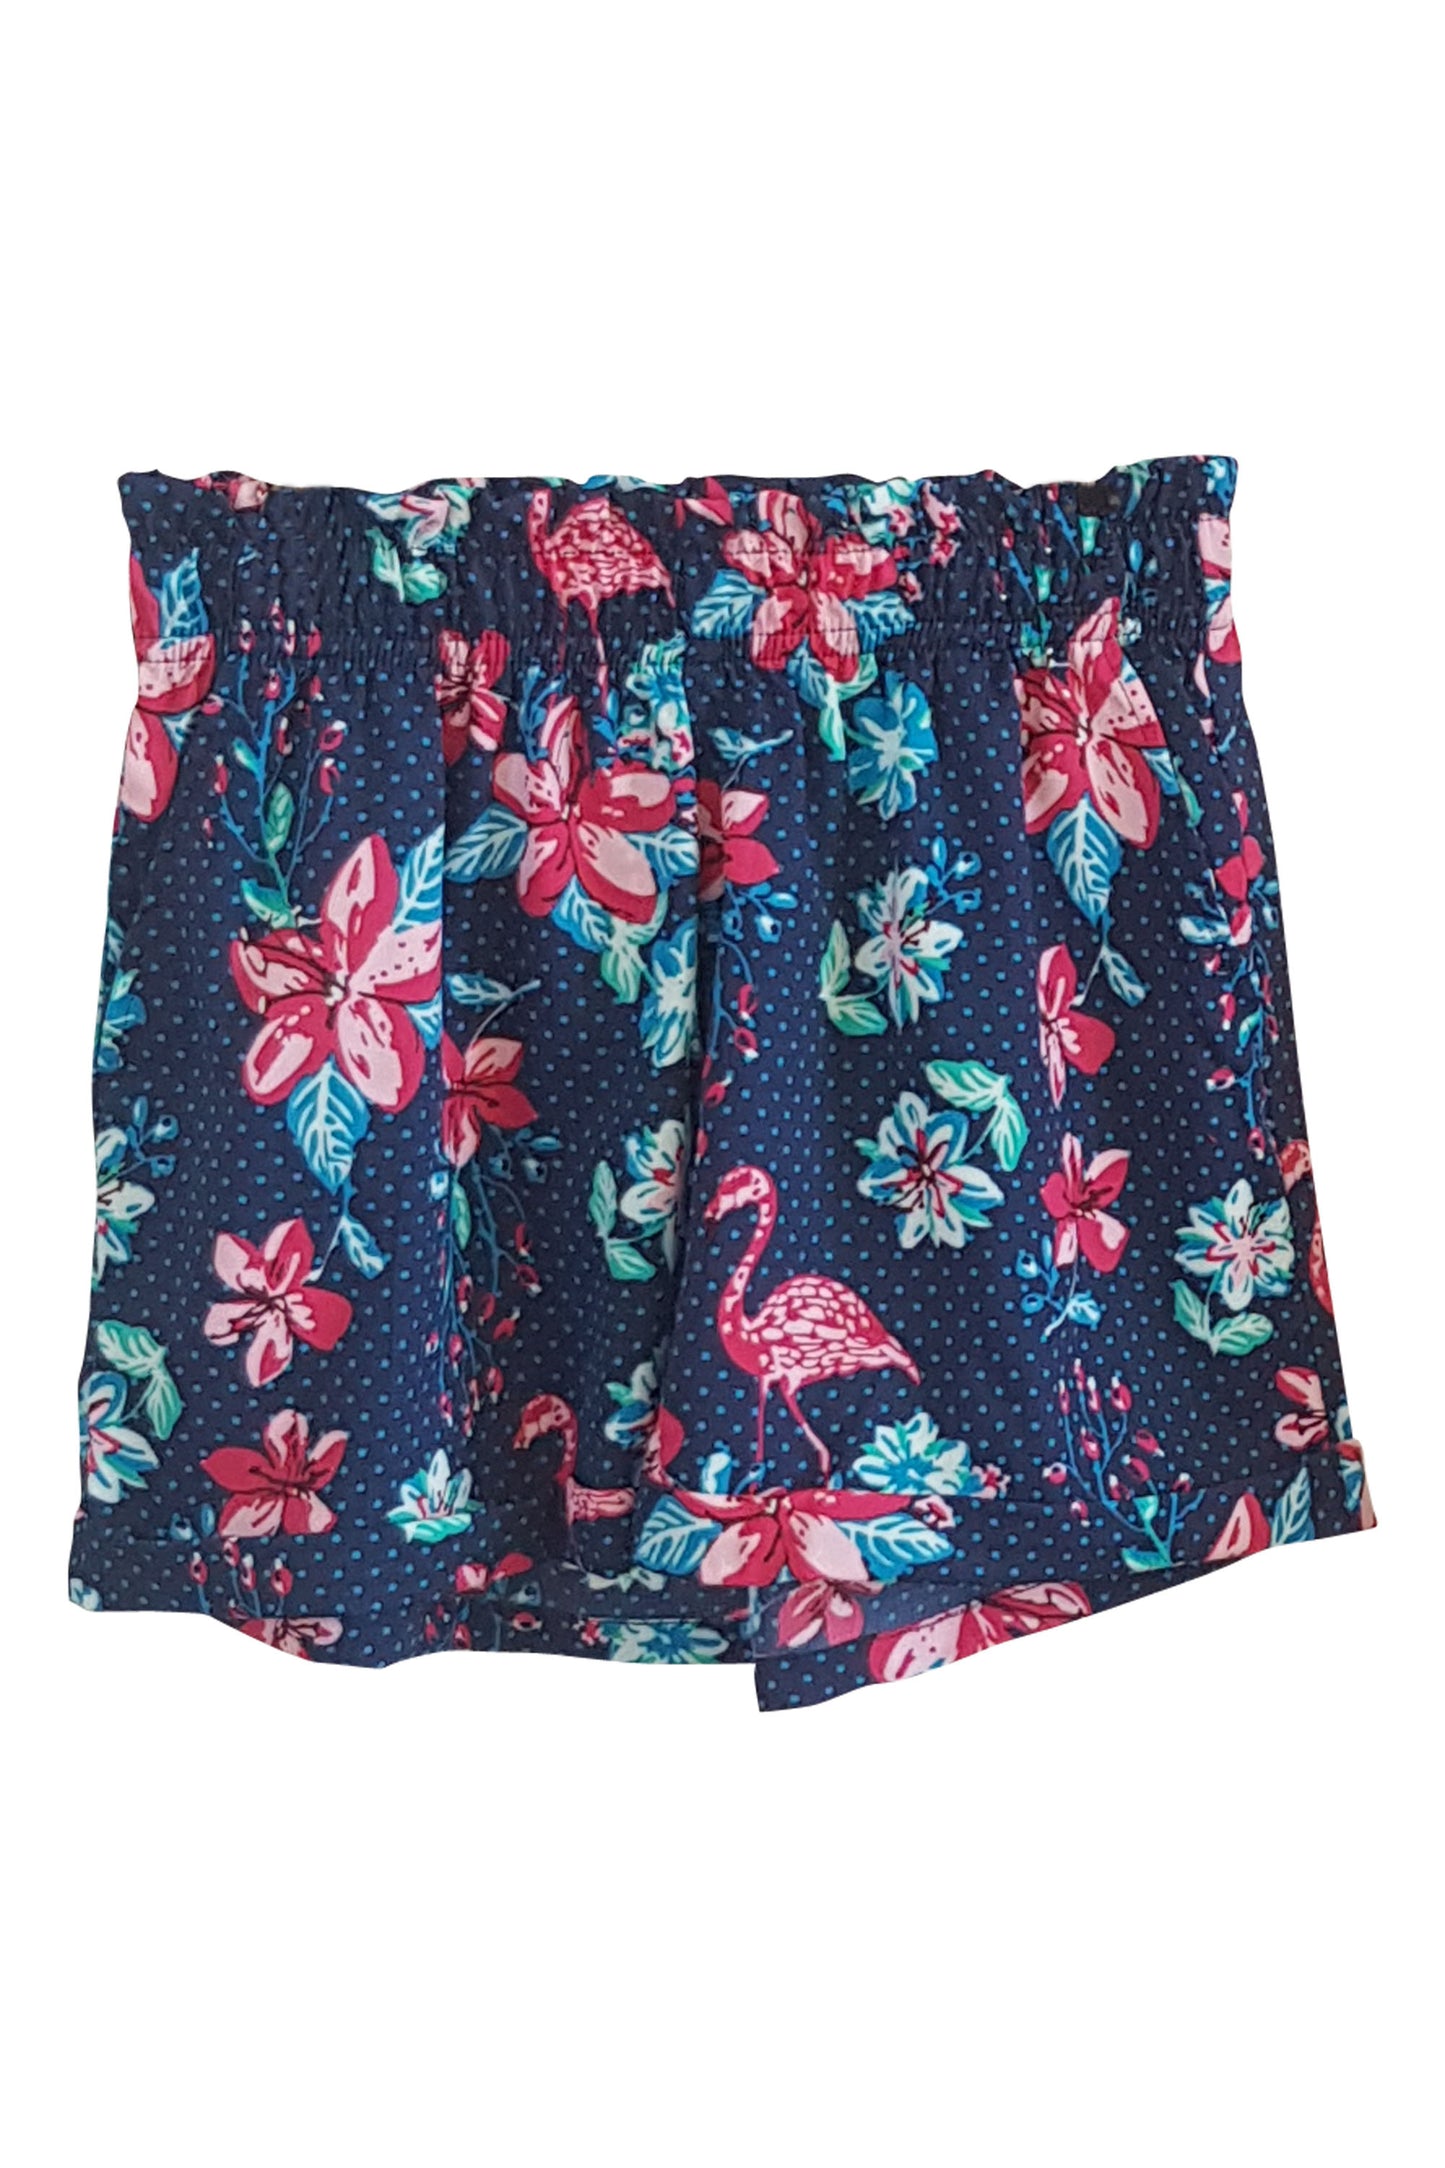 Women's Shorts Combo (Pack of 2) - Flamingo Blue & Curse Navy